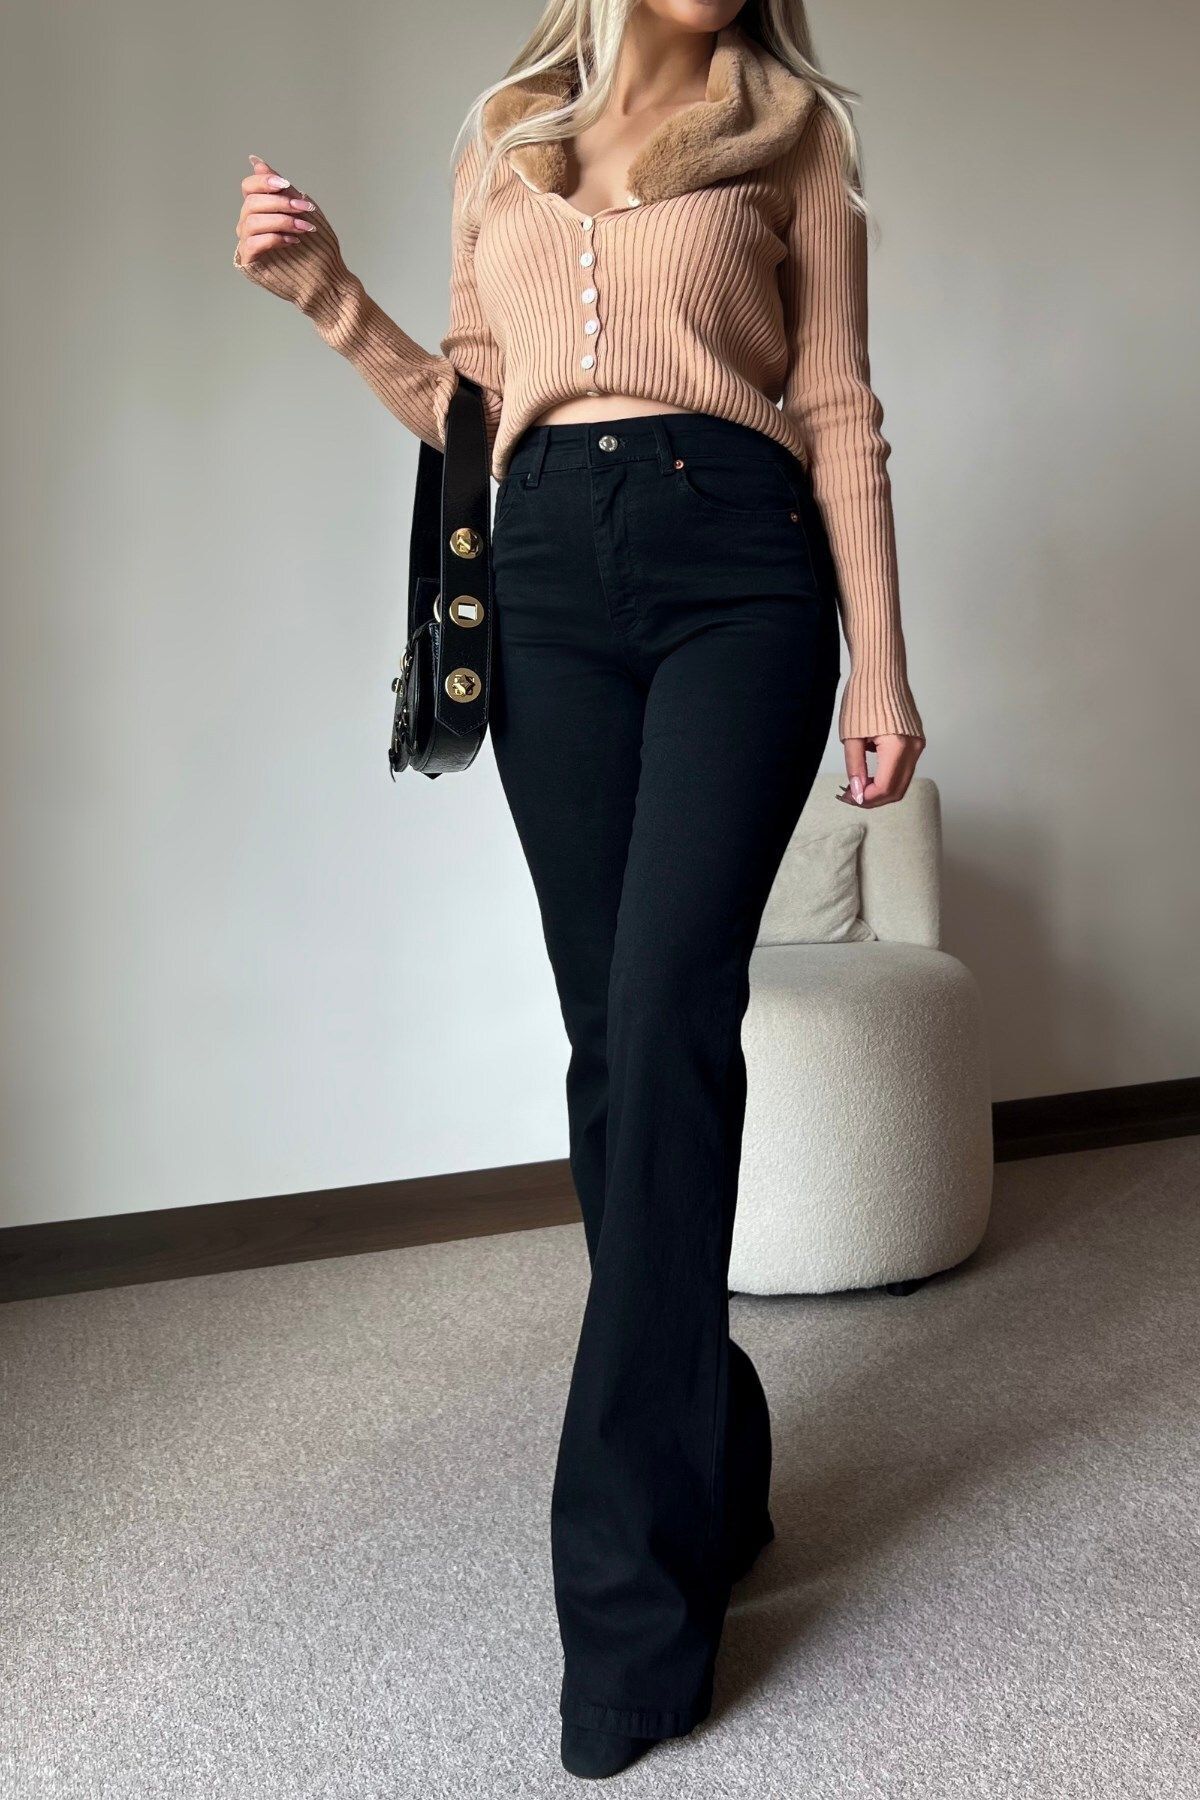 MAKRAS EXCLUSIVE Isabella Zero Max Yüksek Bel Esnek Siyah İspanyol Paça Jeans Pantolon(tam kalıp)